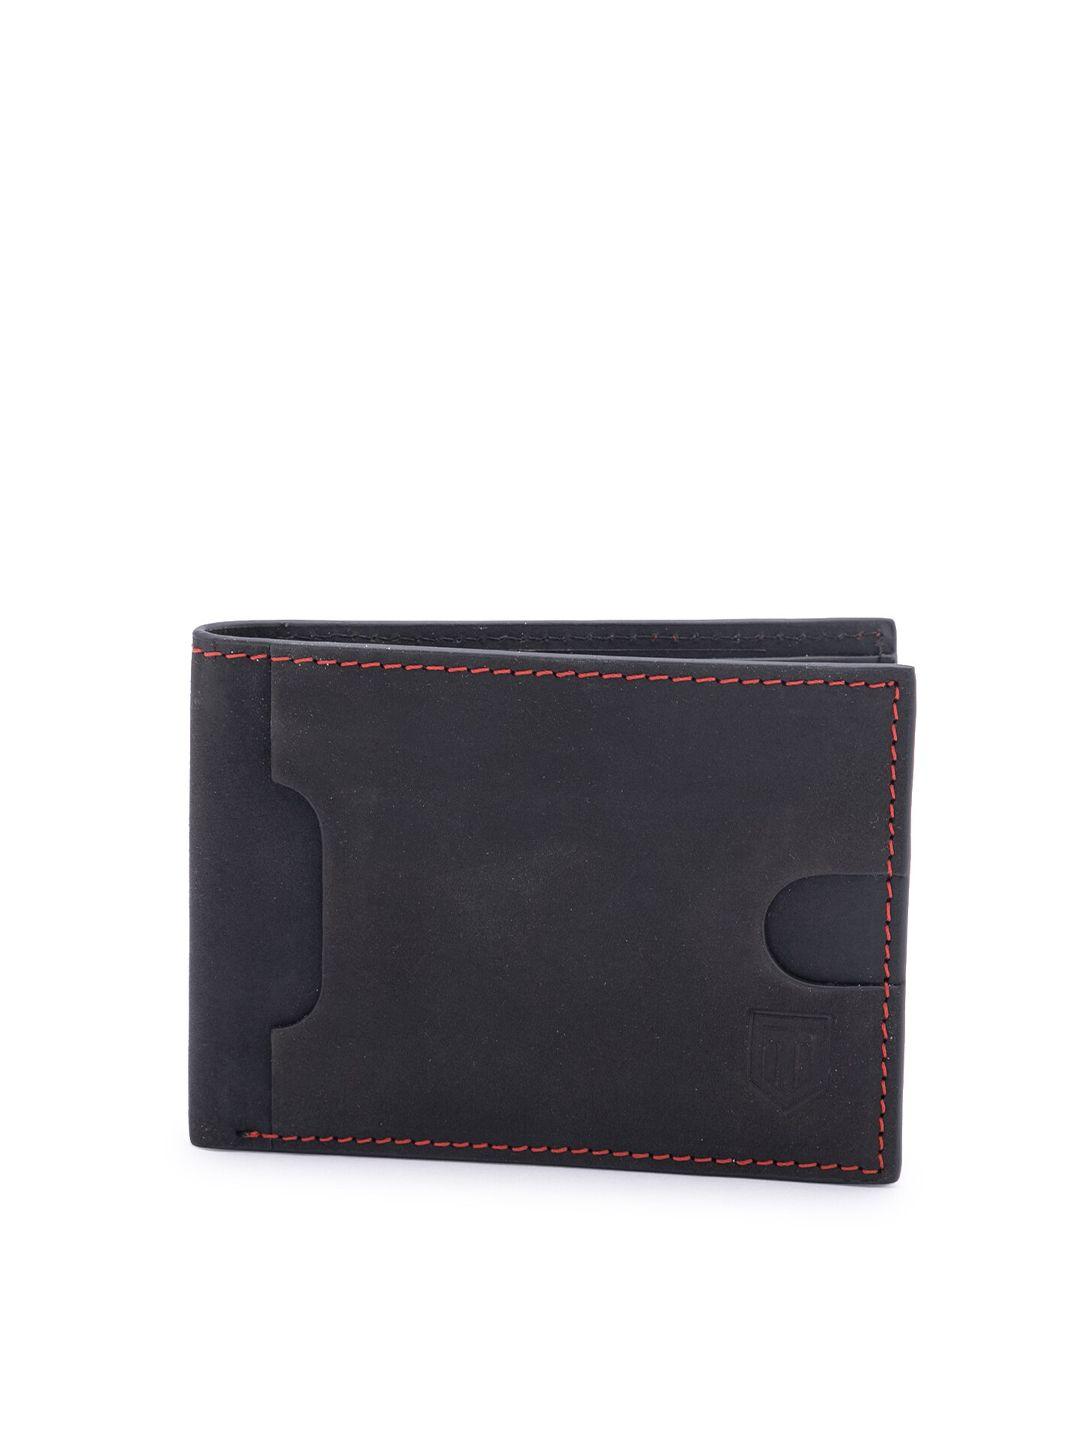 tom lang london men black leather two fold wallet